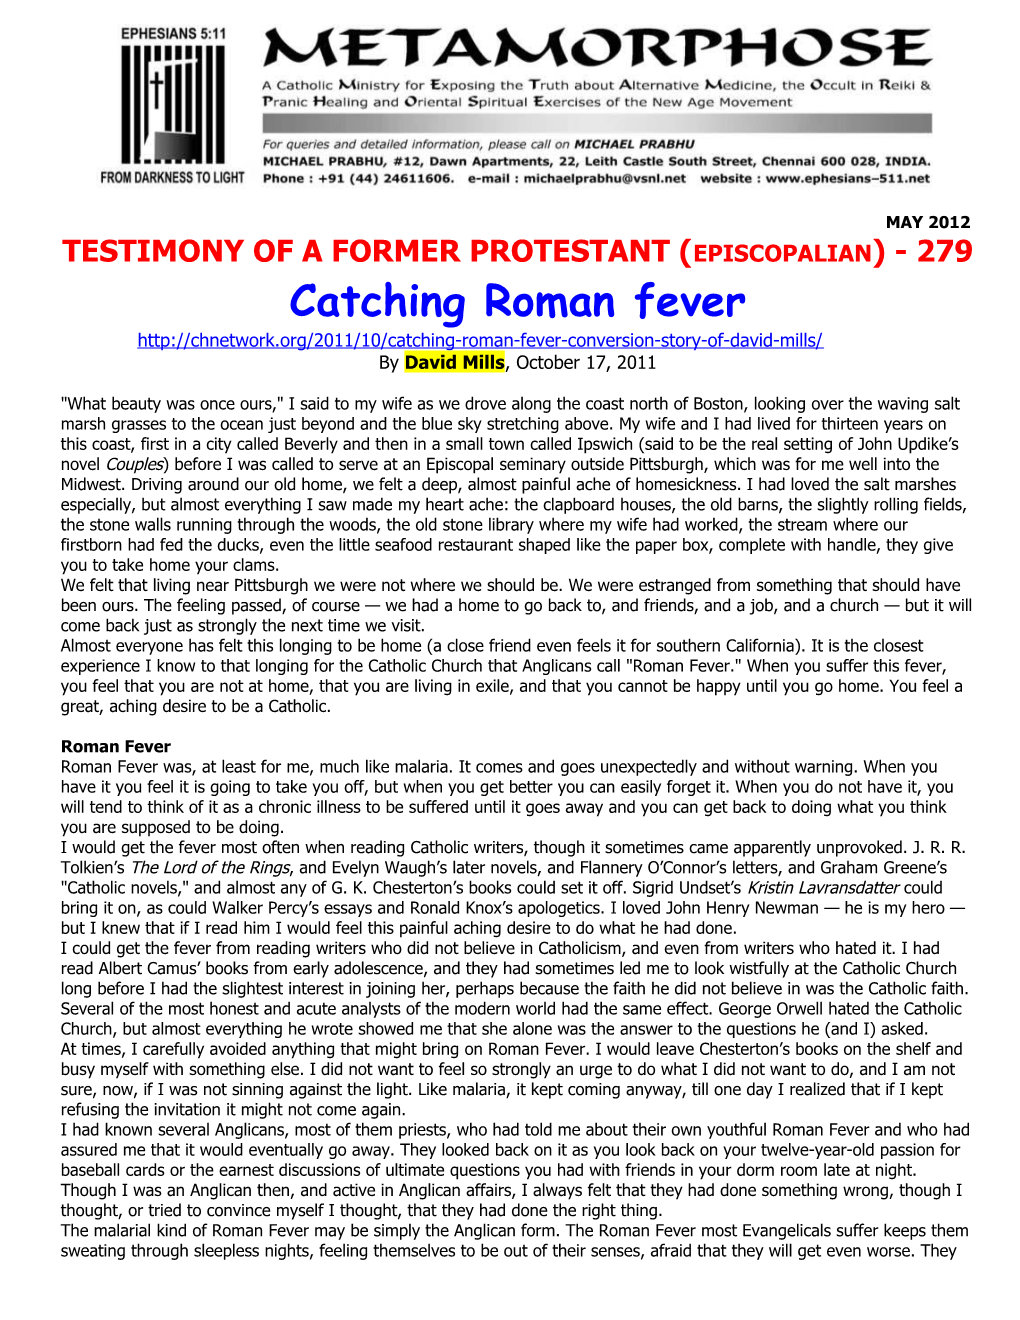 Testimony of a Former Protestant (Episcopalian) - 279